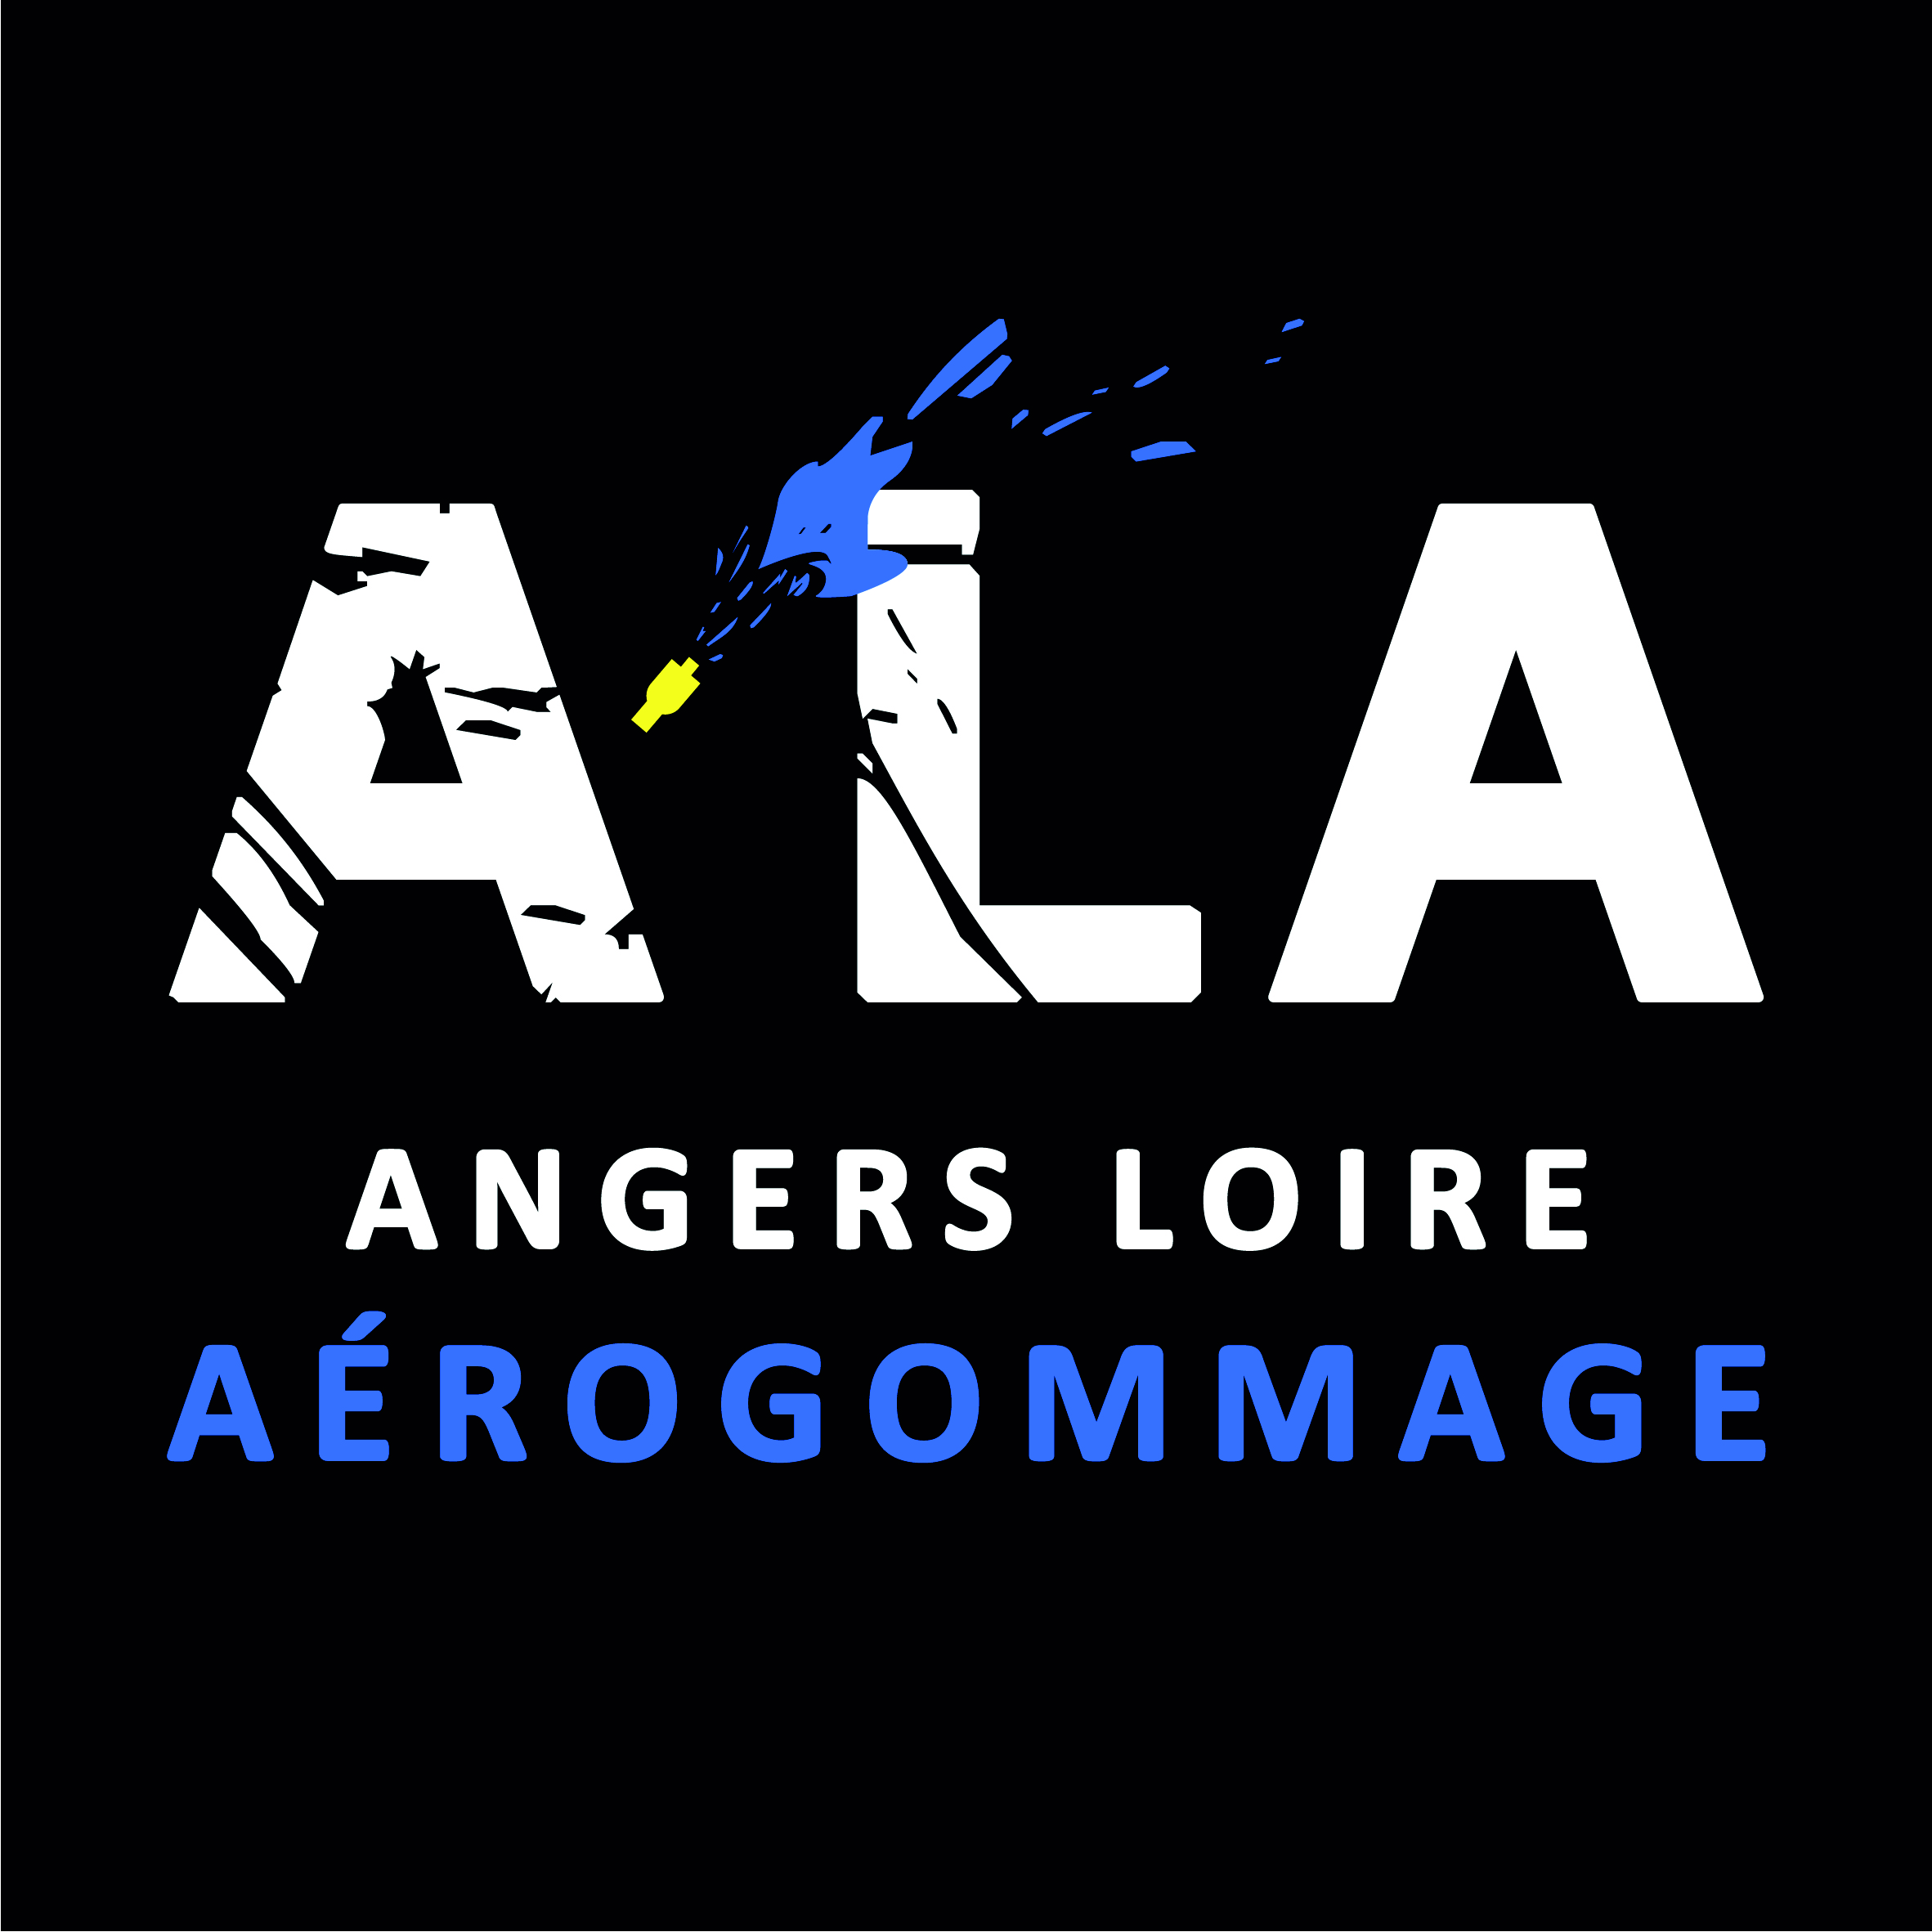 Angers Loire Aerogommage